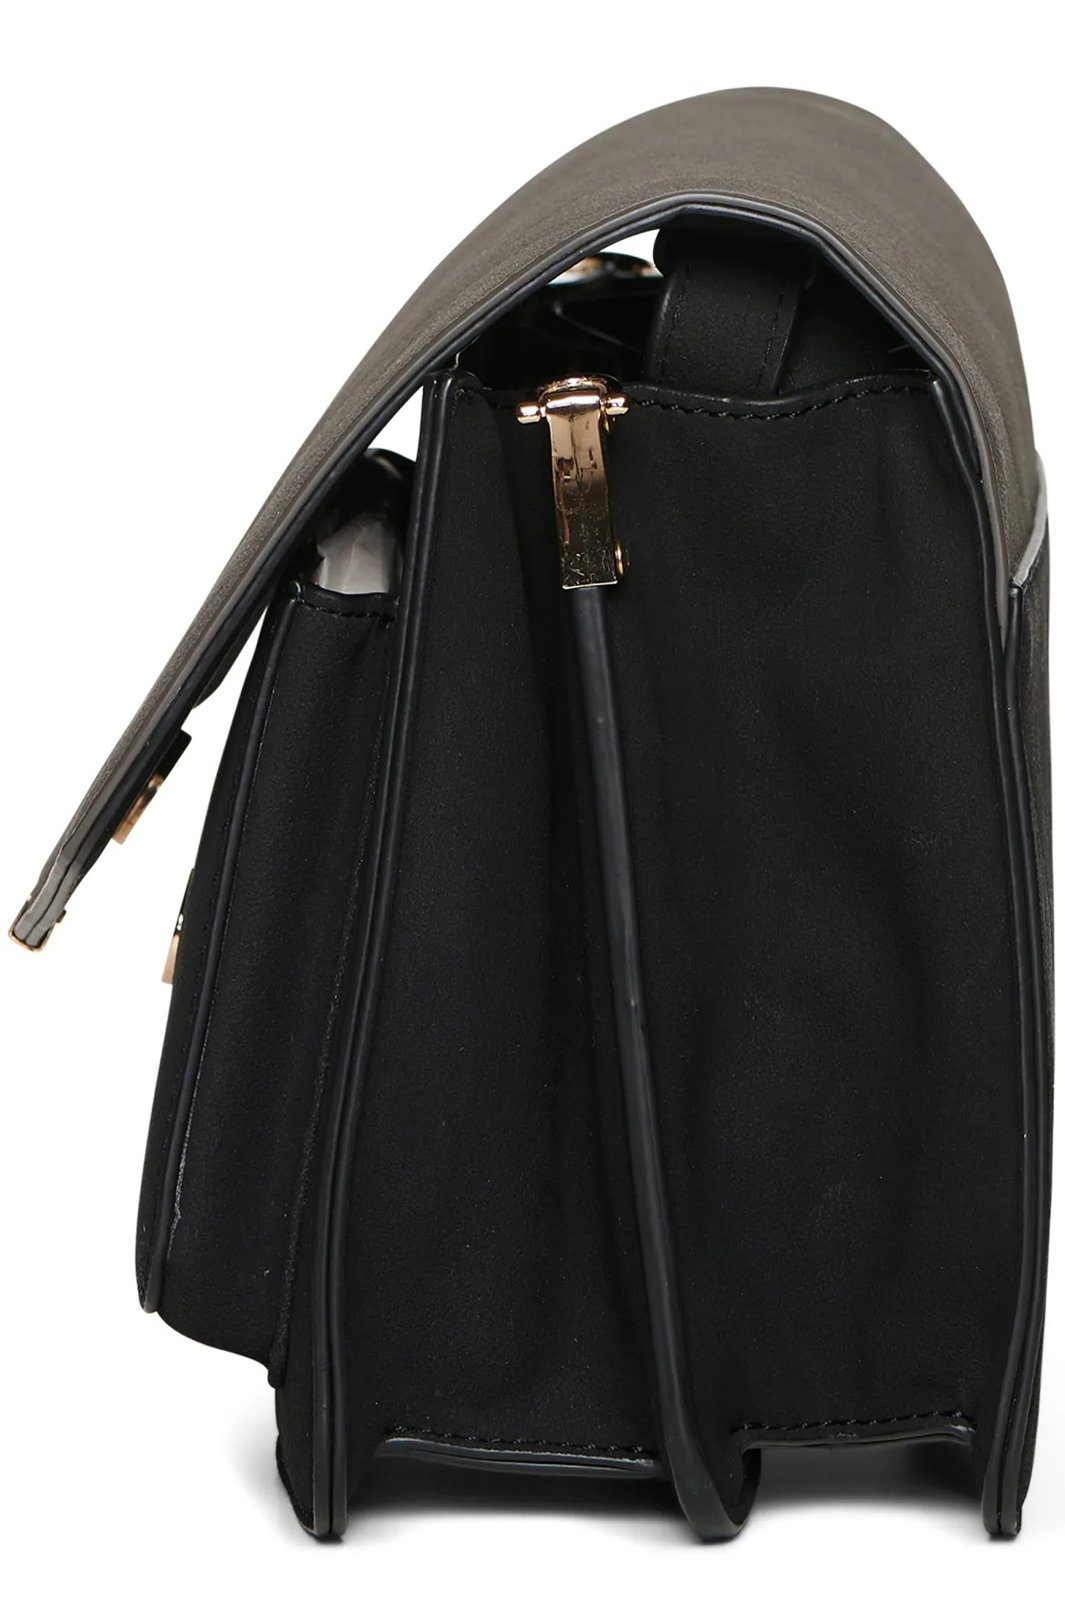 Noella - Blanca Multi Compartment Bag - Dark Grey/Black Tasker 